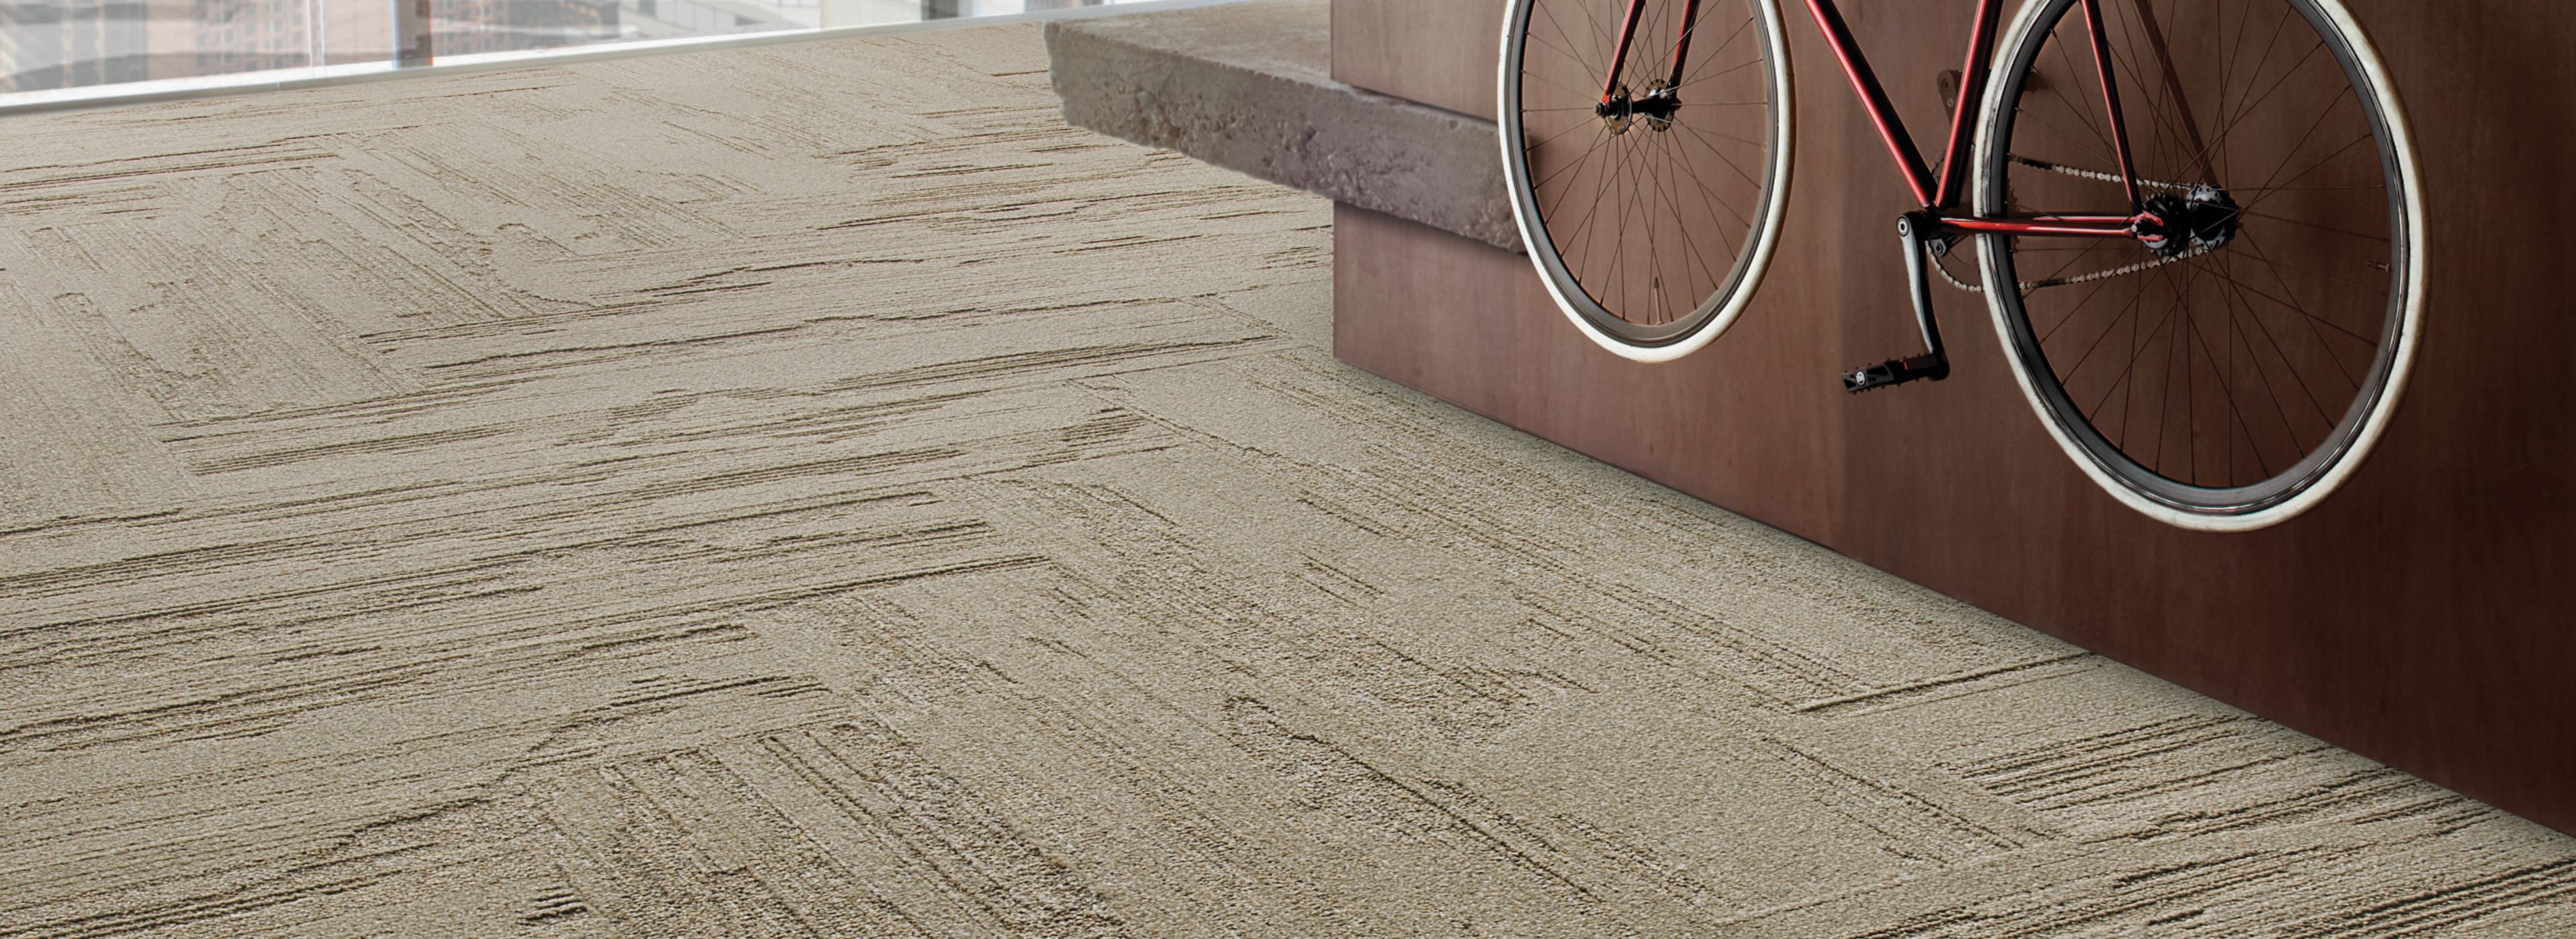 Interface UR501 plank carpet tile in office common area with bike  numéro d’image 1